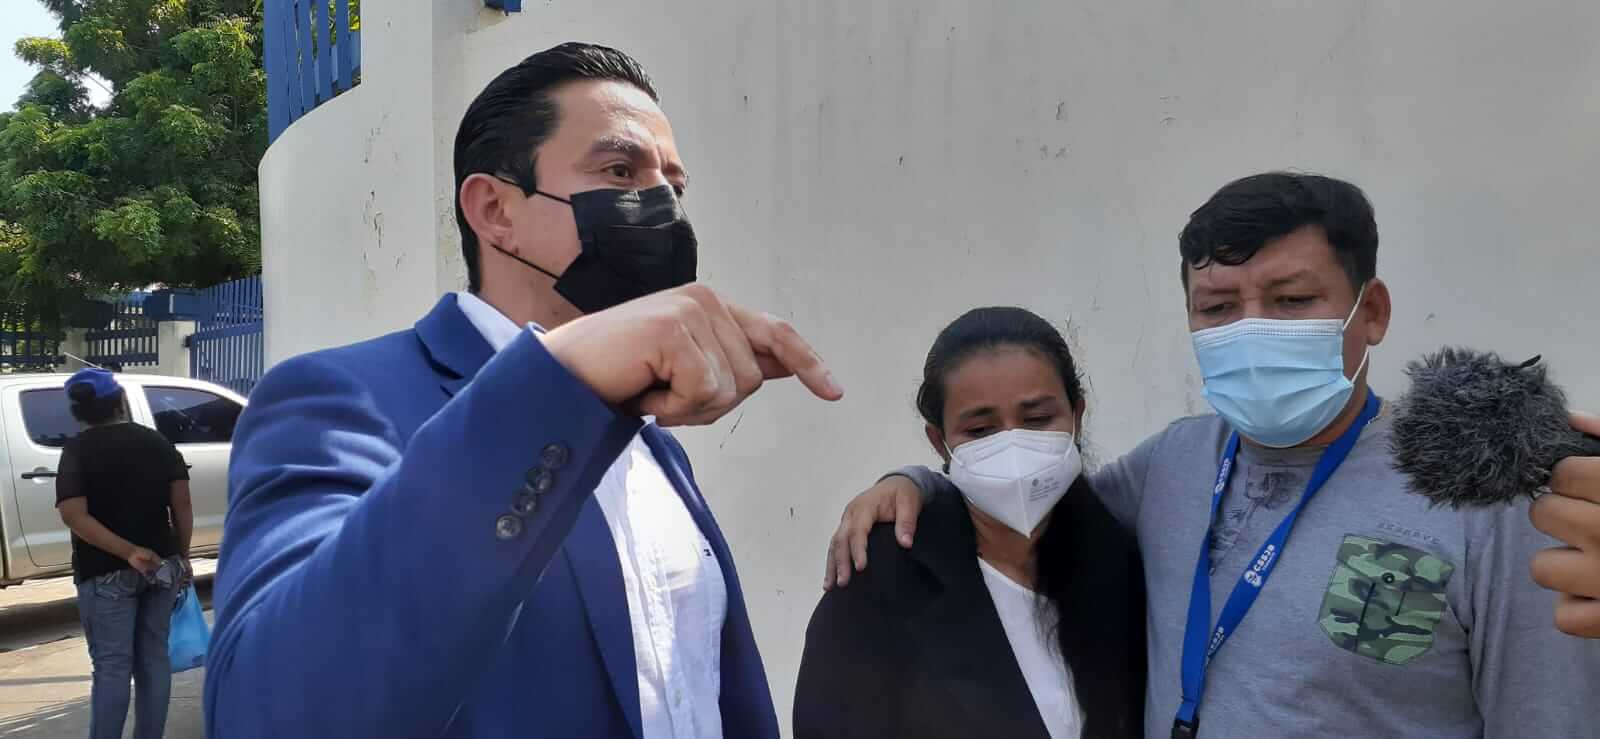 Familiares de Farling Aburto Betancourt al salir del juicio